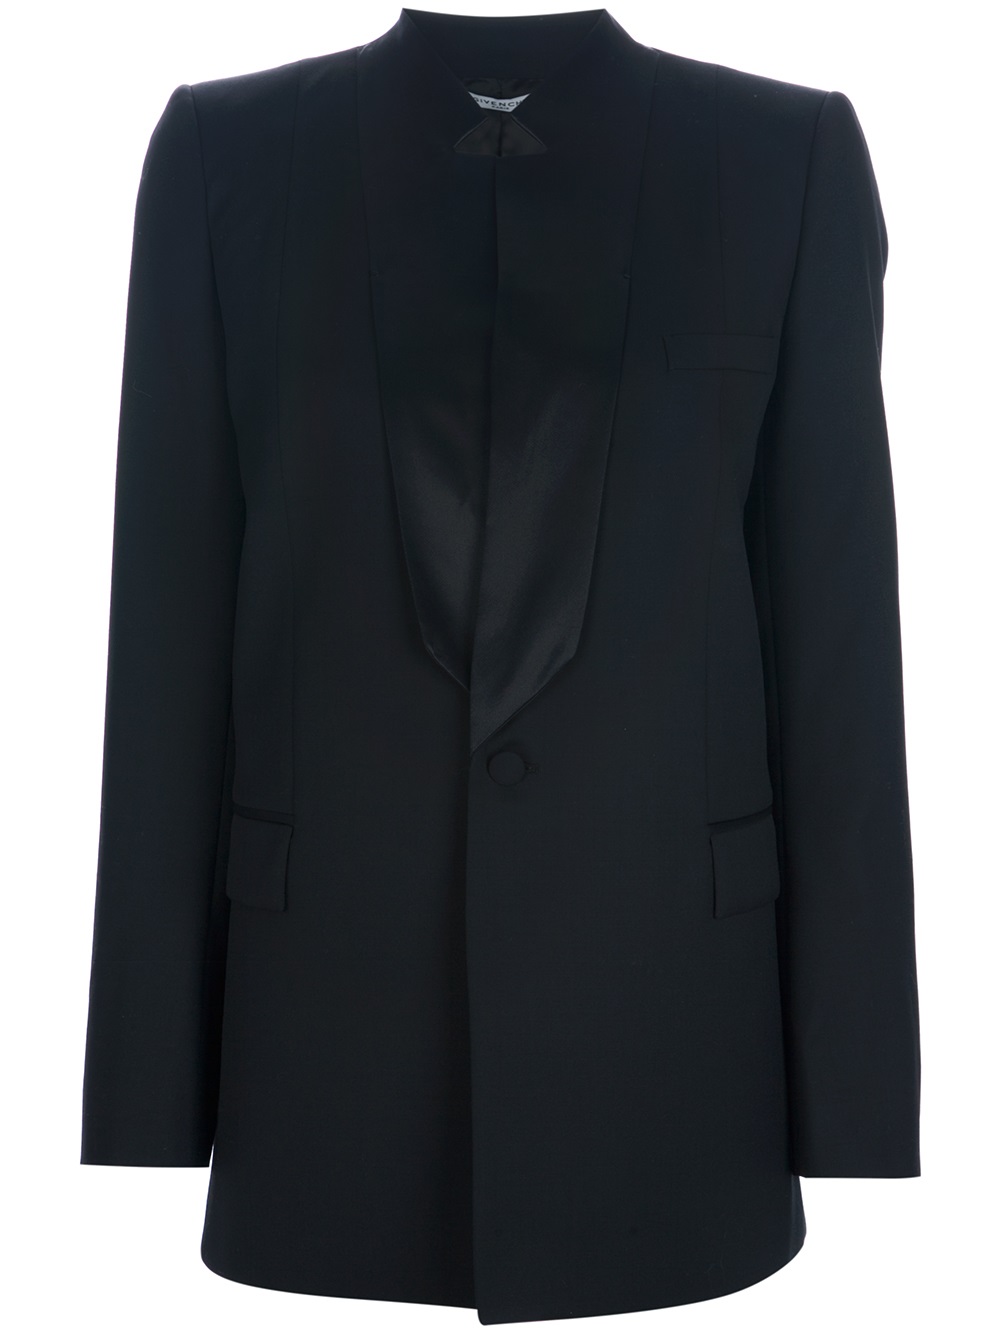 Lyst - Givenchy Long Blazer in Black